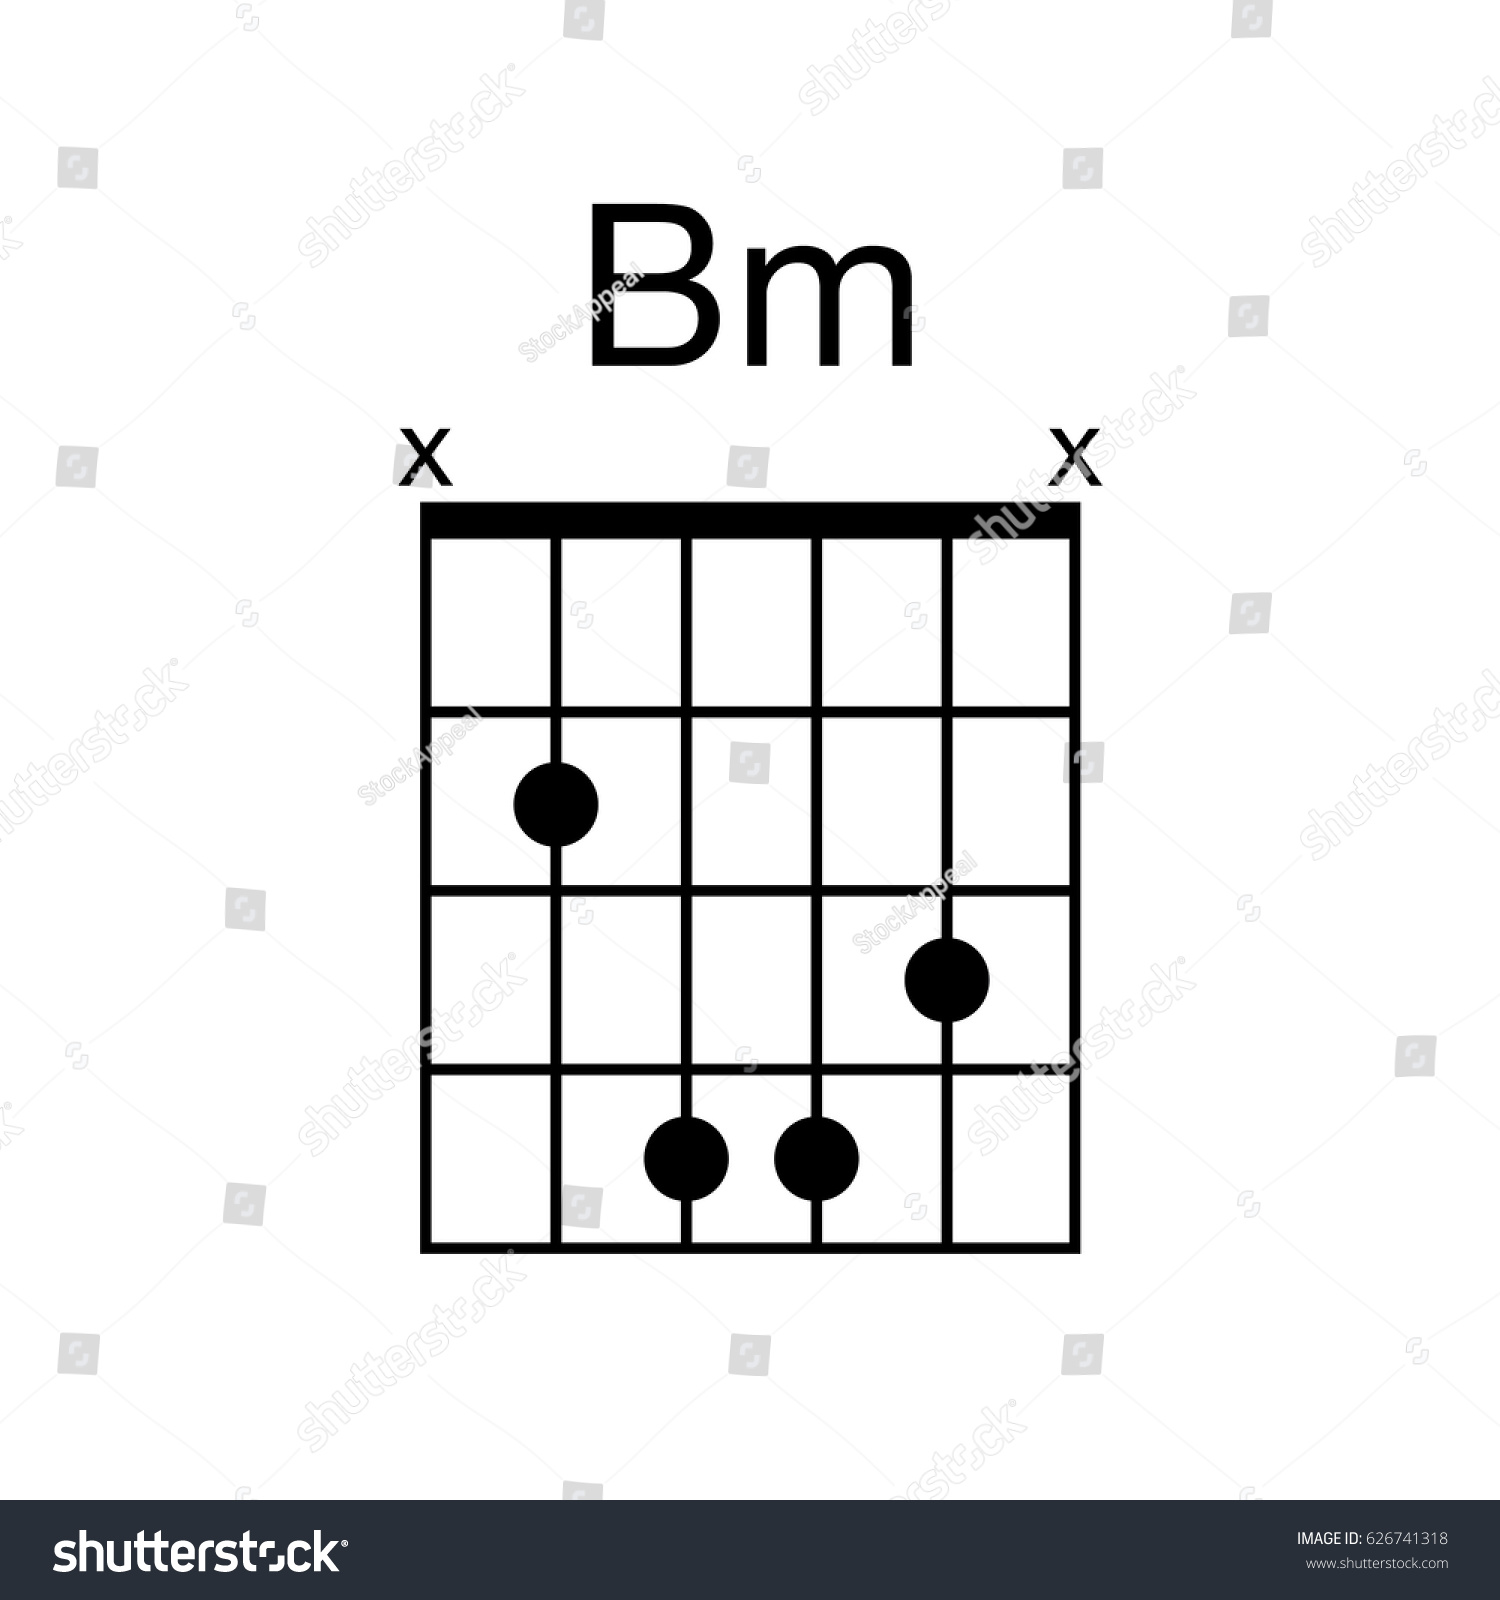 How To Master Bm Bar Chord 3 Easy Steps Beginners